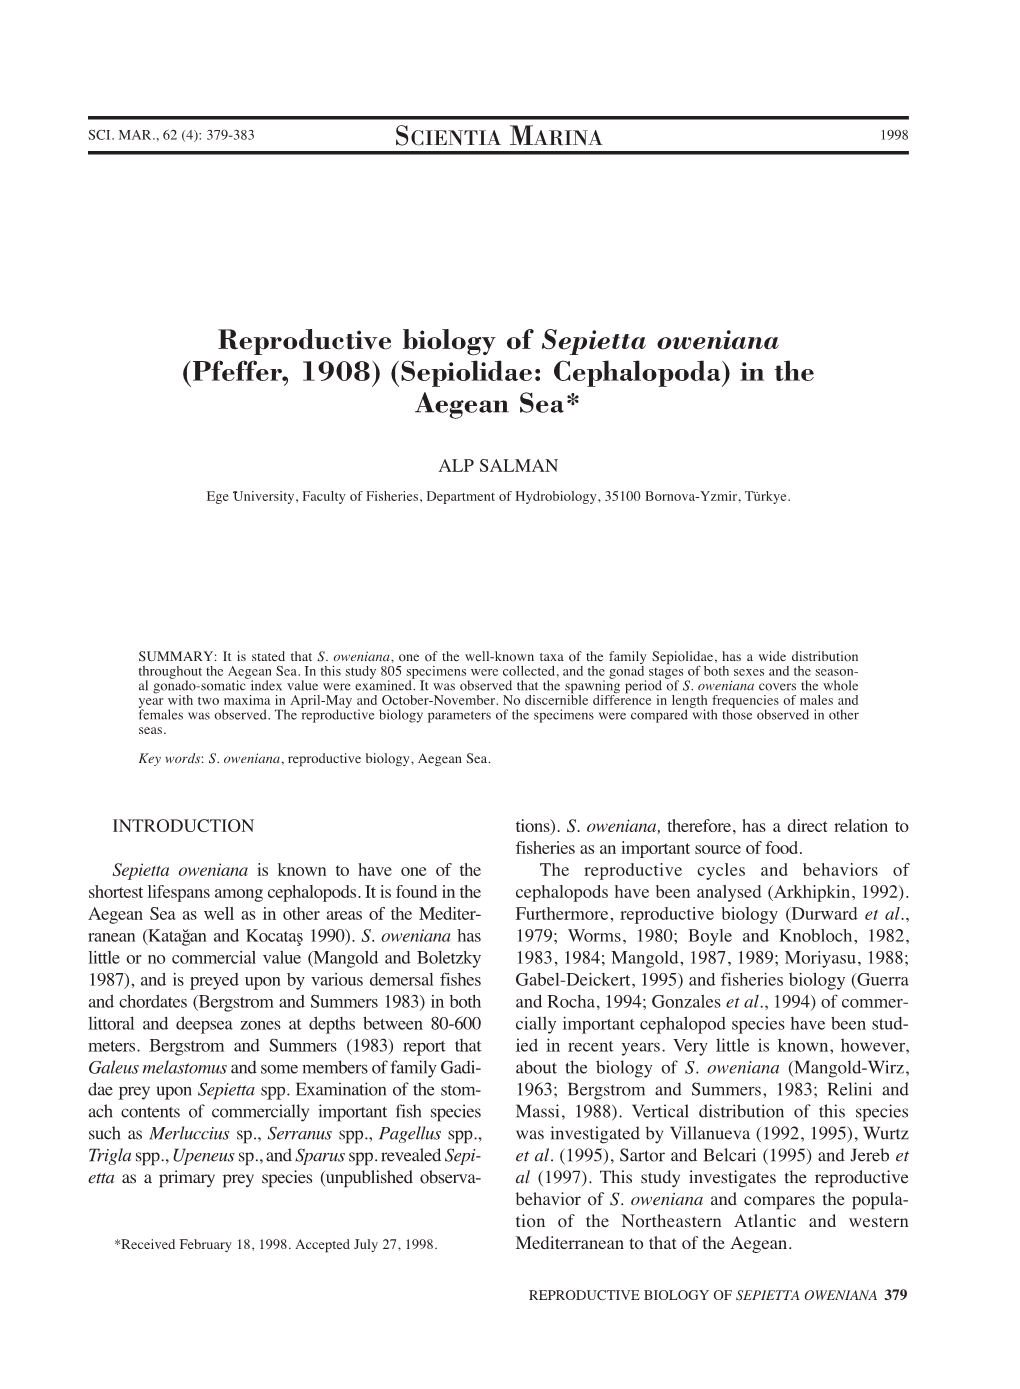 Reproductive Biology of Sepietta Oweniana (Pfeffer, 1908) (Sepiolidae: Cephalopoda) in the Aegean Sea*